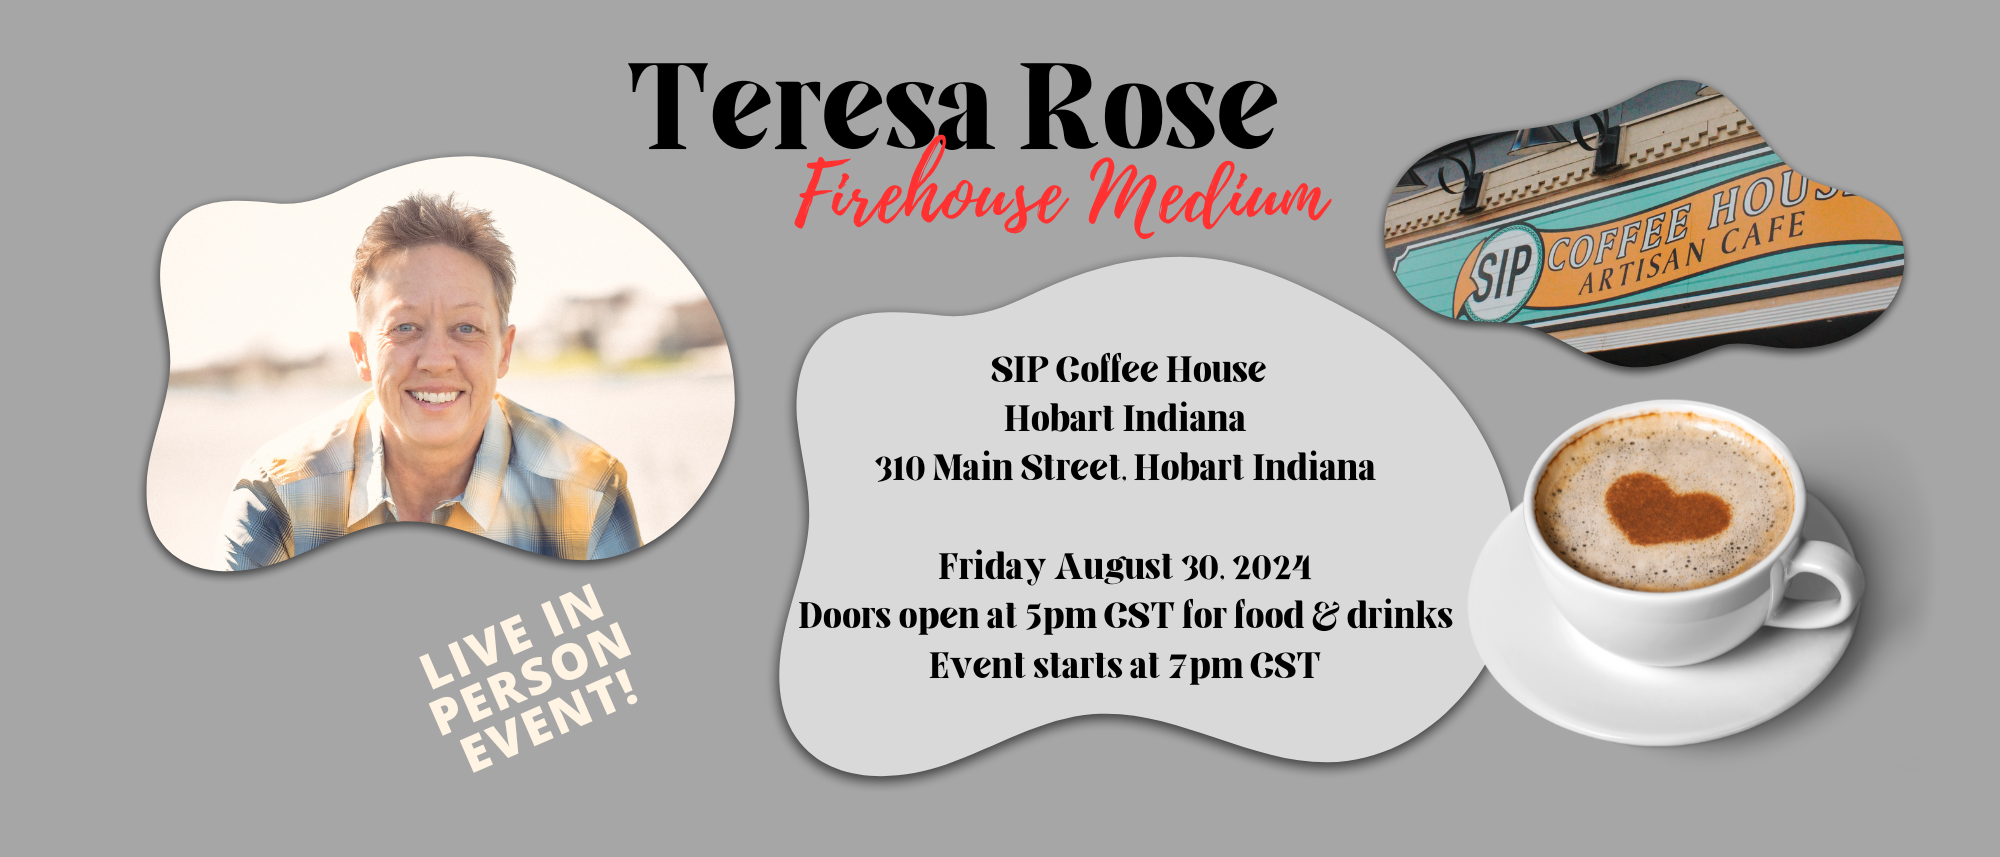 Teresa Rose Firehouse Medium | Sip Coffee House Hobart